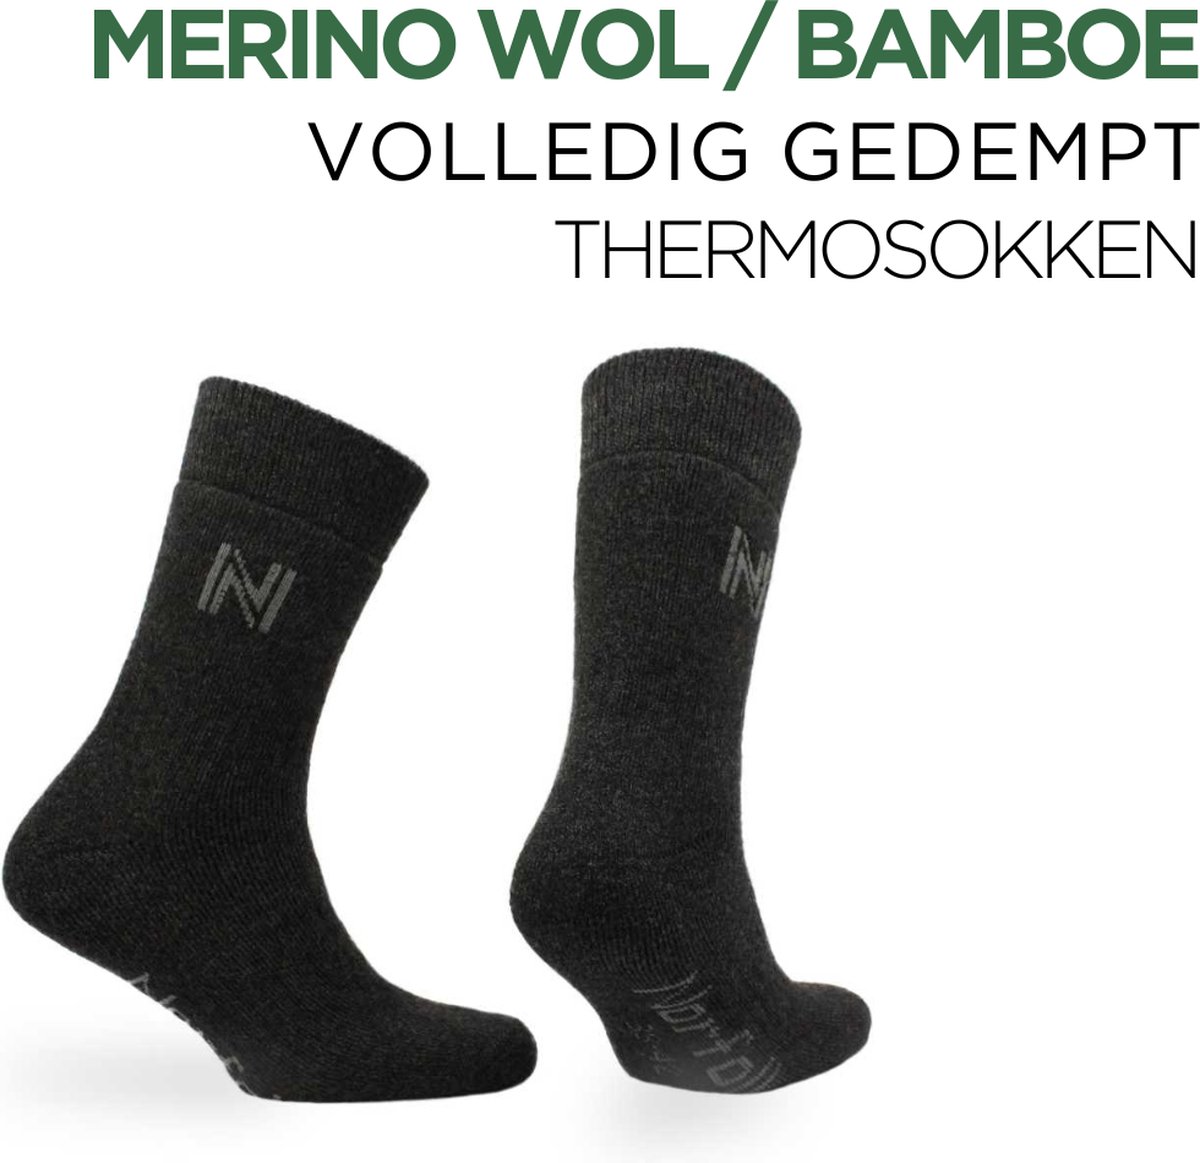 Norfolk - Wandelsokken - Merino wol en Bamboe Mix - Thermische Zacht en Warme Outdoorsokken - Merino wol sokken - Sokken Dames - Sokken Heren - Wollen Sokken - Donker Zwart - Maat 35-38 - Gabby